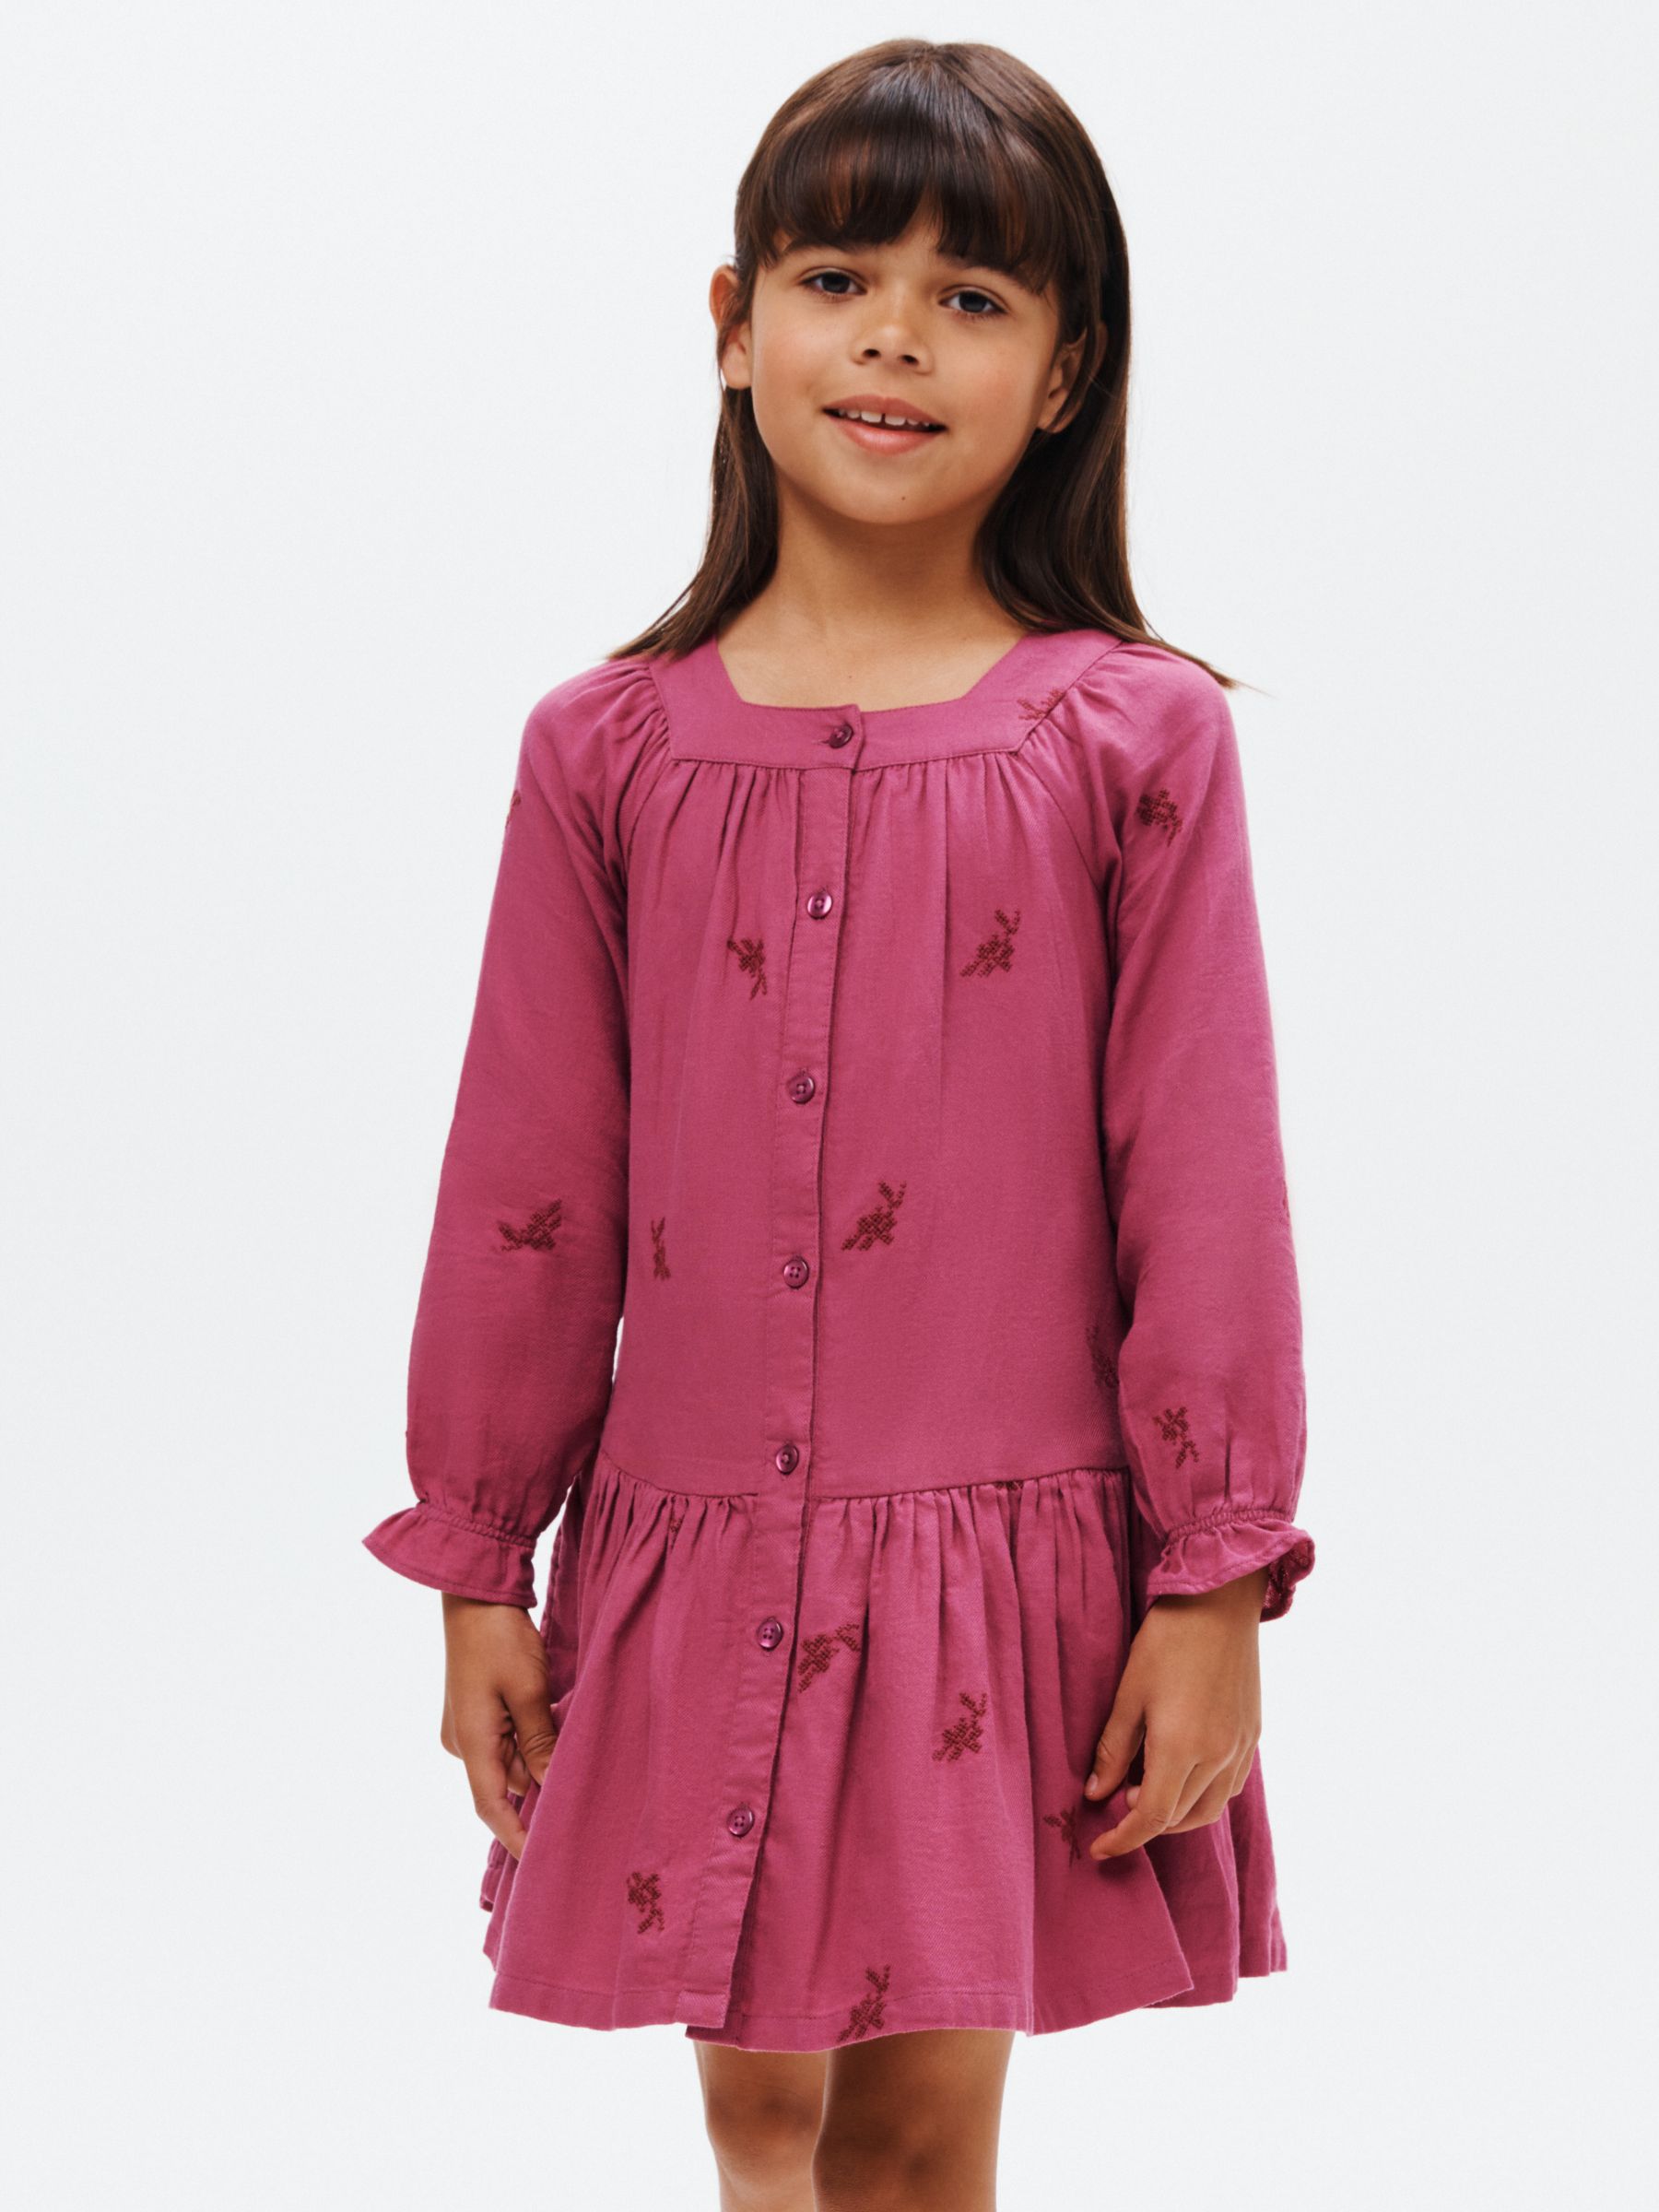 John Lewis Kids' Embroidered Ruffle Shirt Dress, Berry